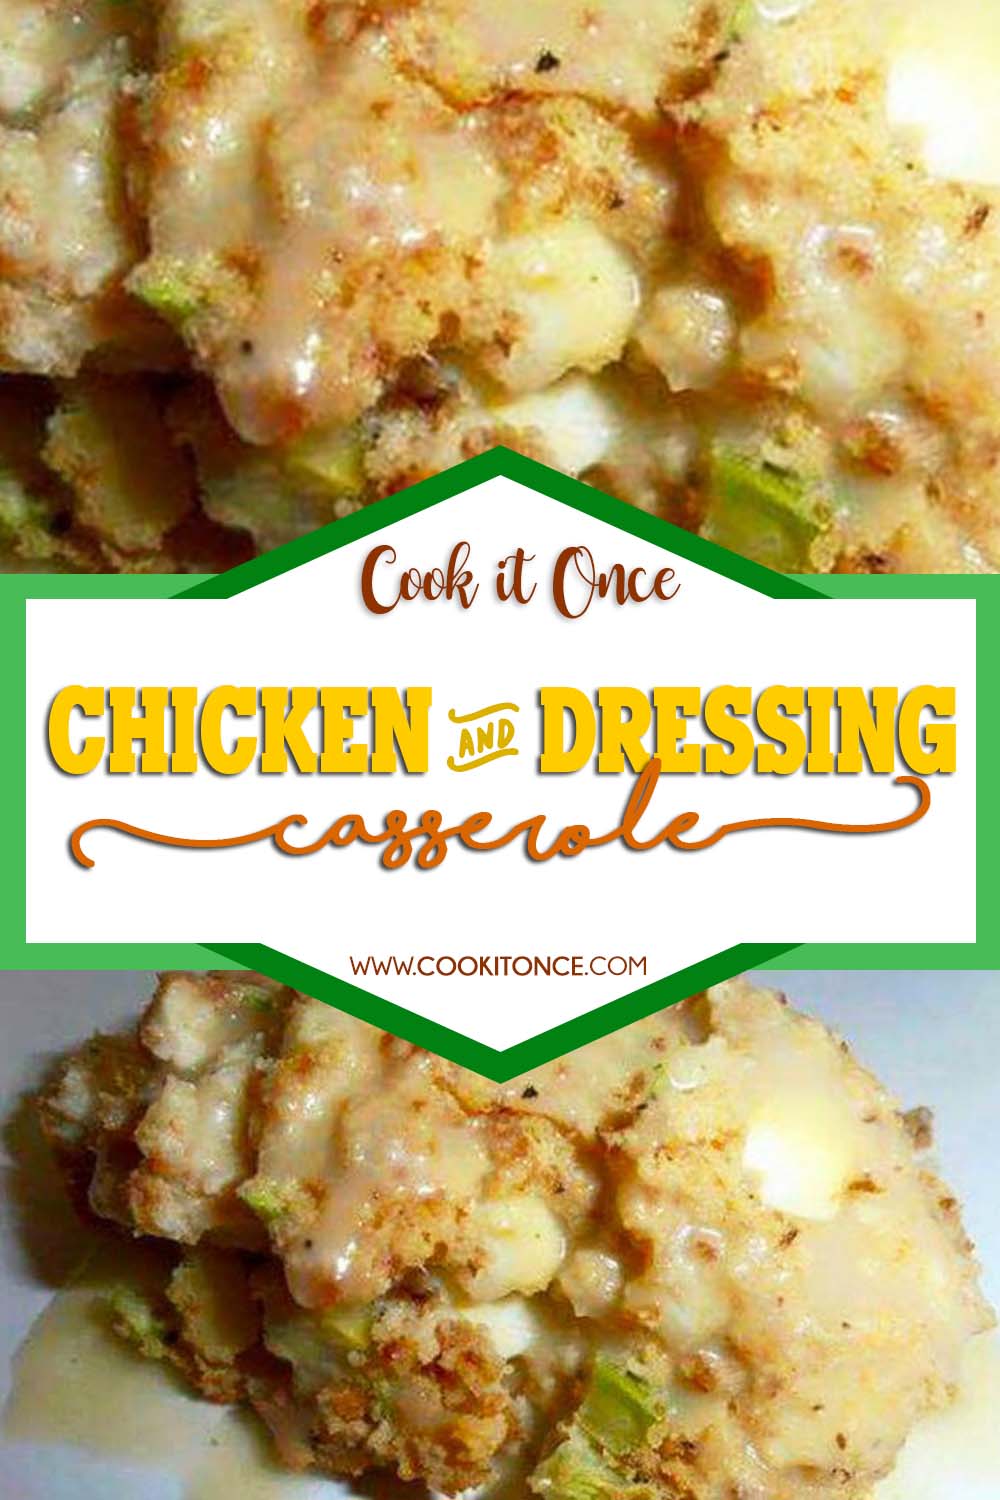 Chicken and Dressing Casserole Recipe